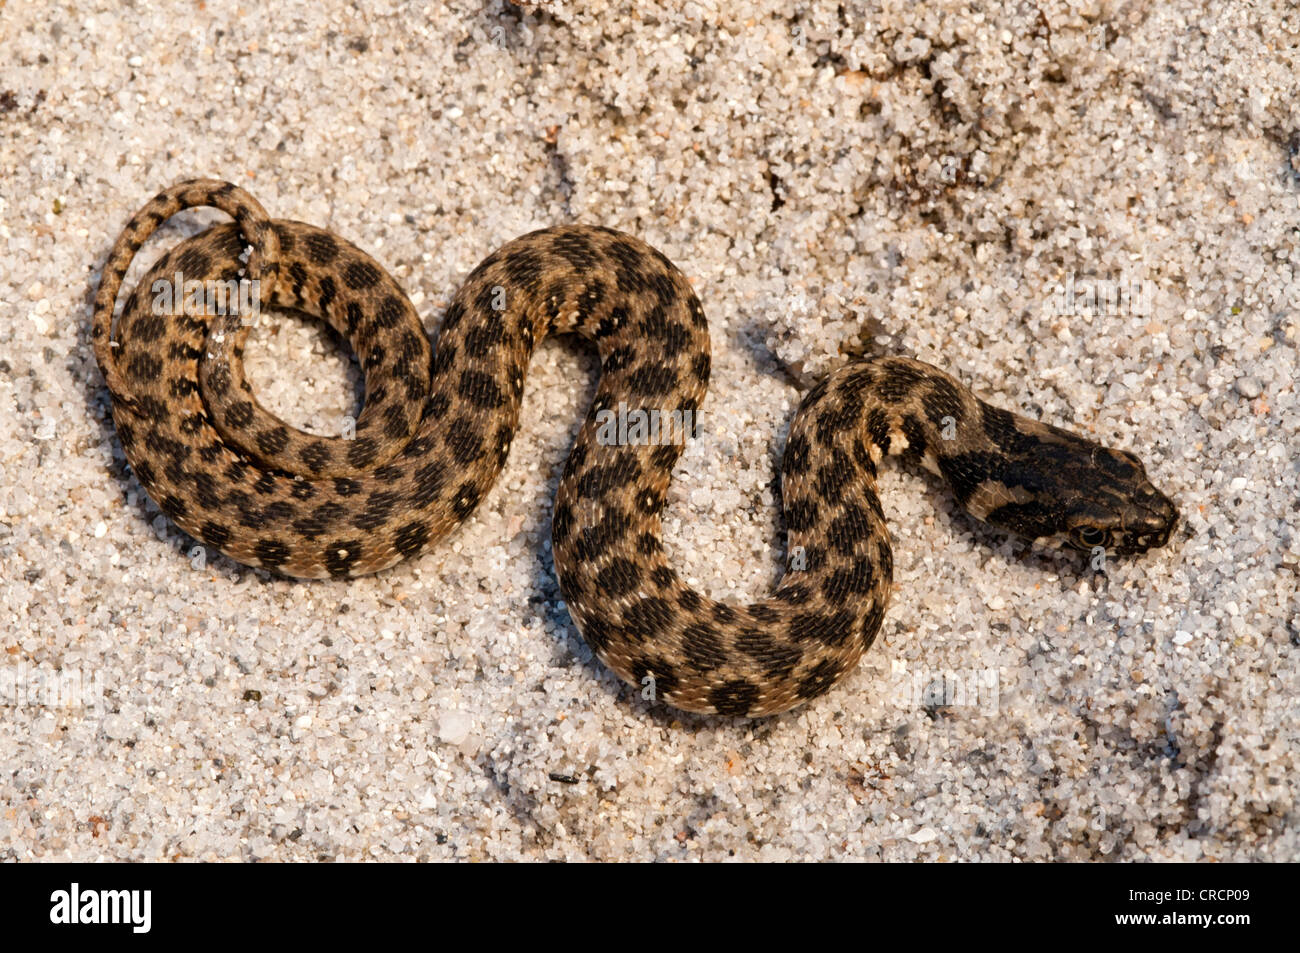 Viperine snake Viperine, serpent d'eau (Natrix maura), Sardaigne, Italie, Europe Banque D'Images